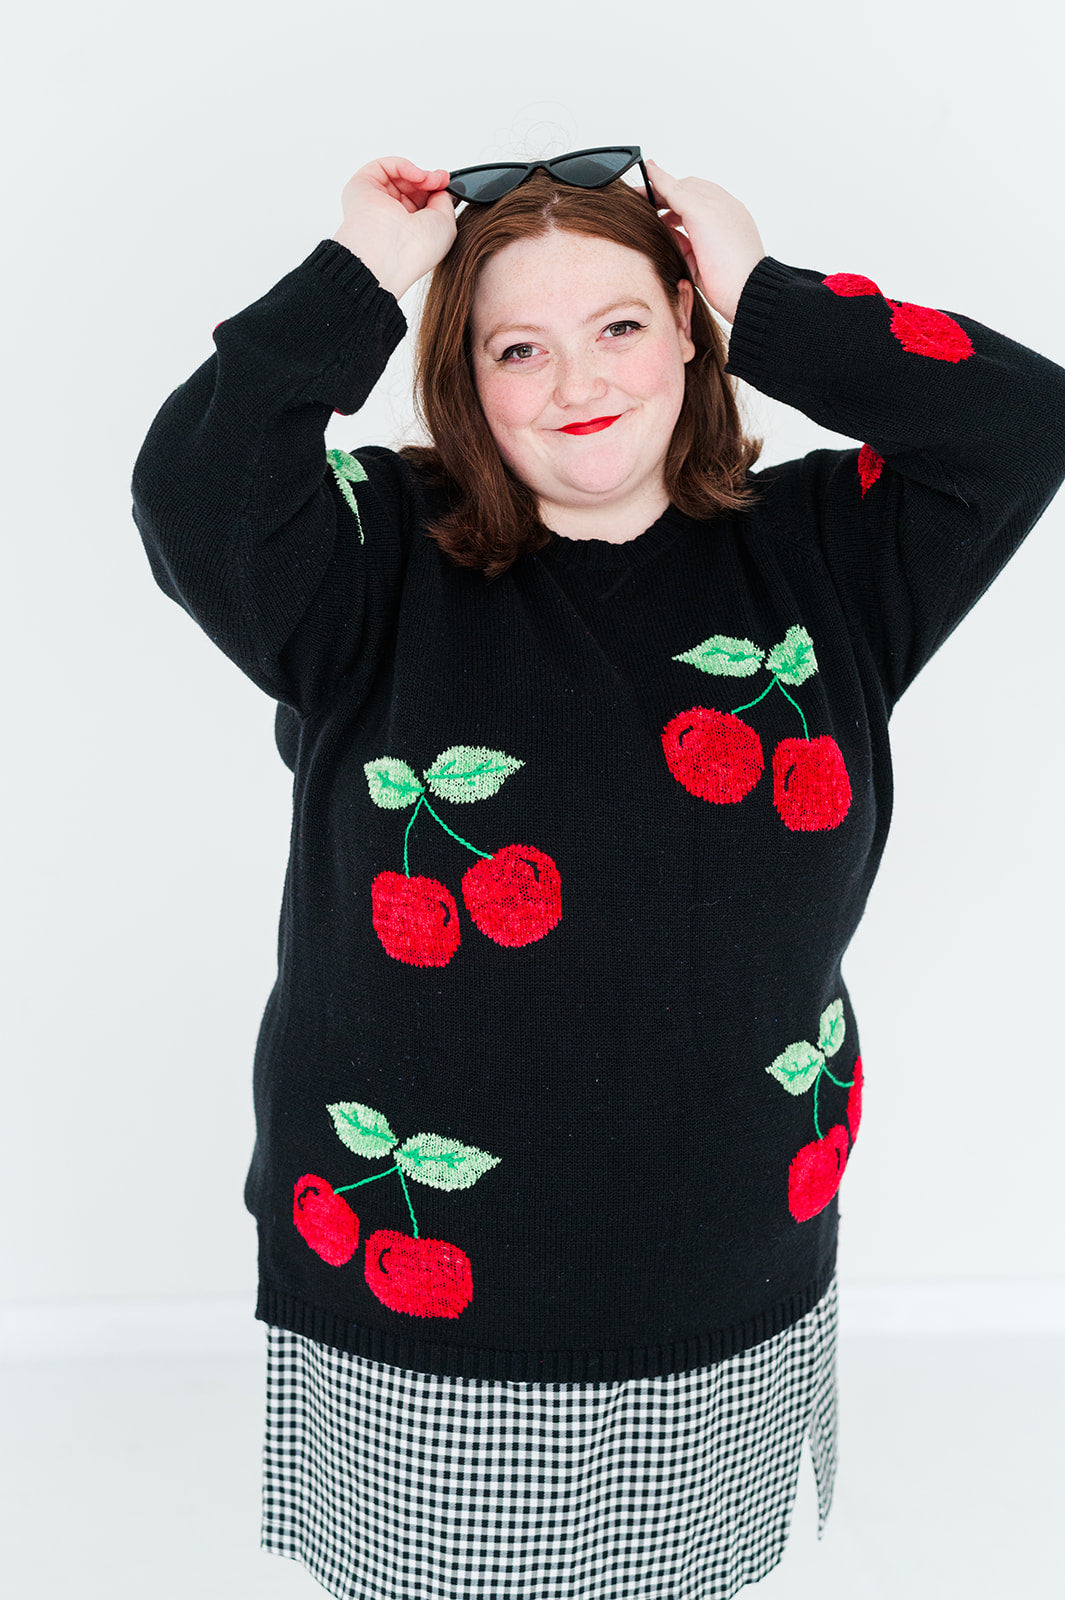 The Cherry Sweater